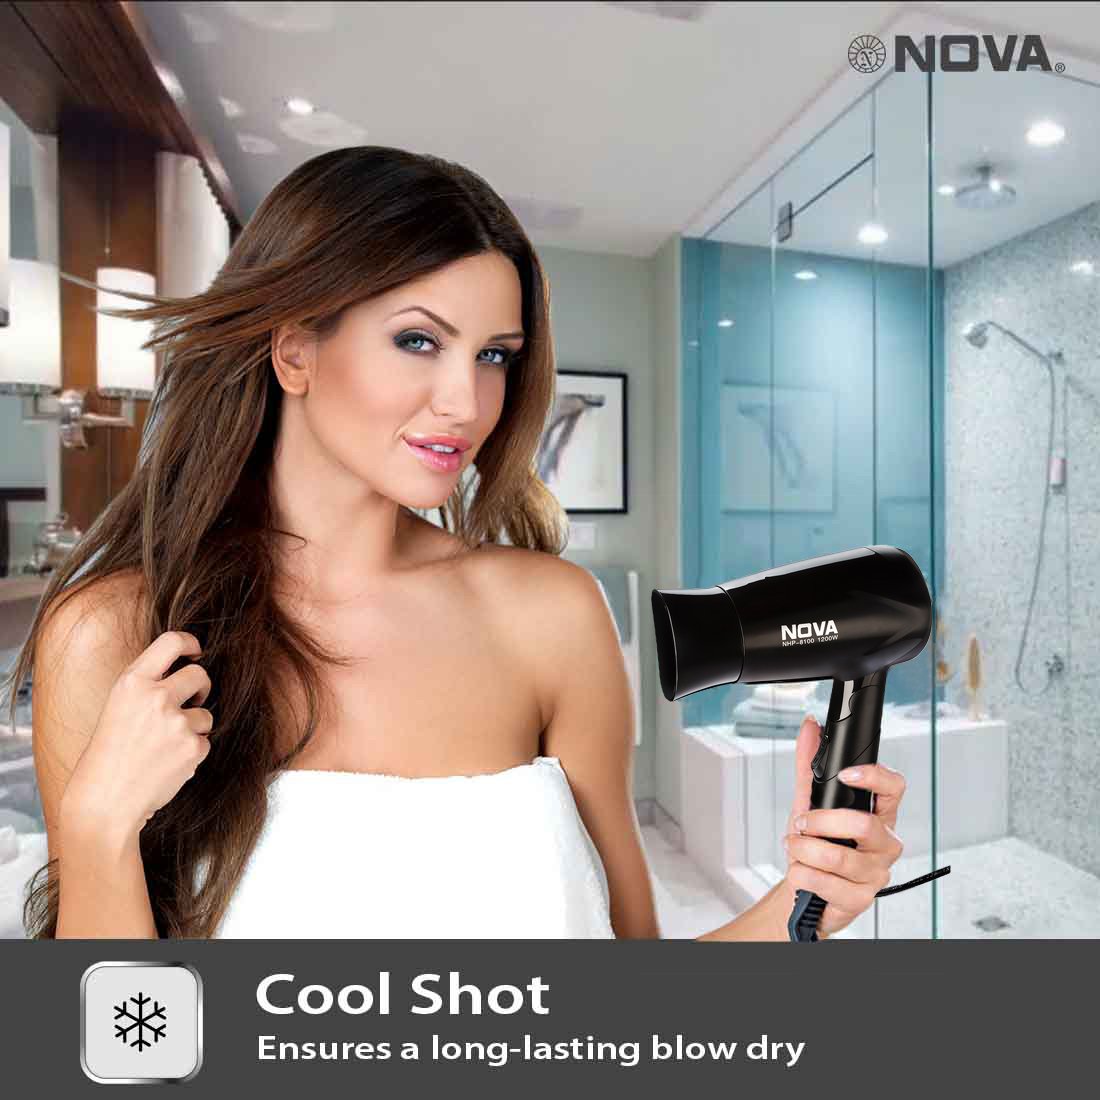 Buy Nova NHP 8100 1200W Corded Hair Dryer (Black) Online At Best Price @  Tata CLiQ